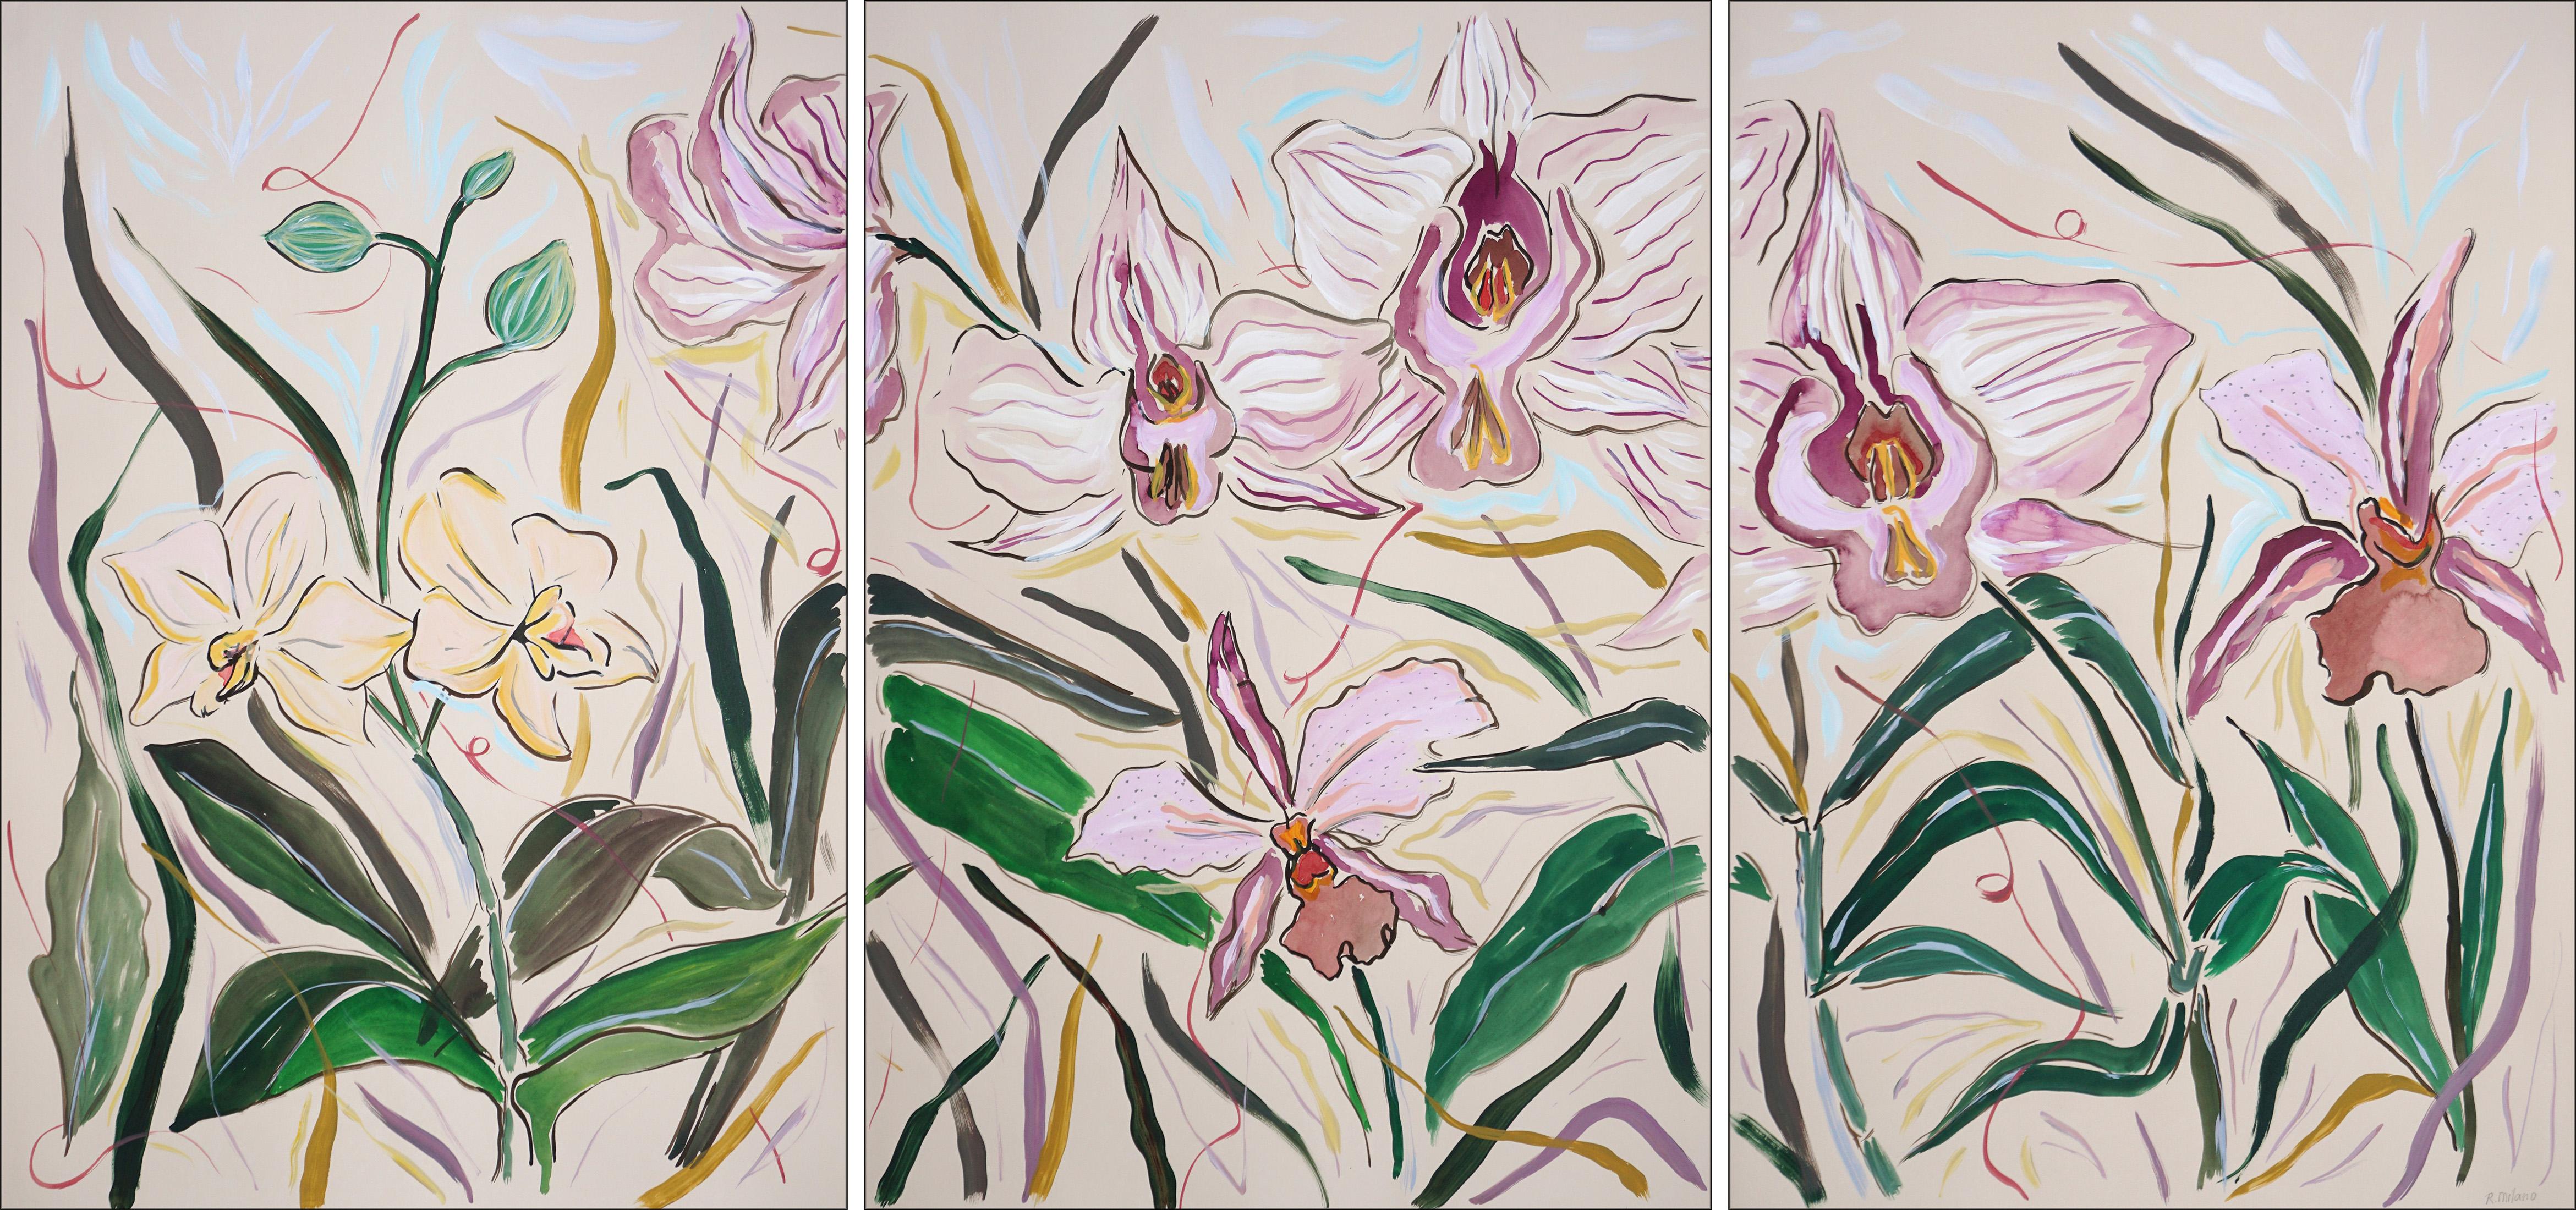 Rosa Orchideenblüte Triptychon, große Blumen, wilde tropische Nature in zartem Lila 